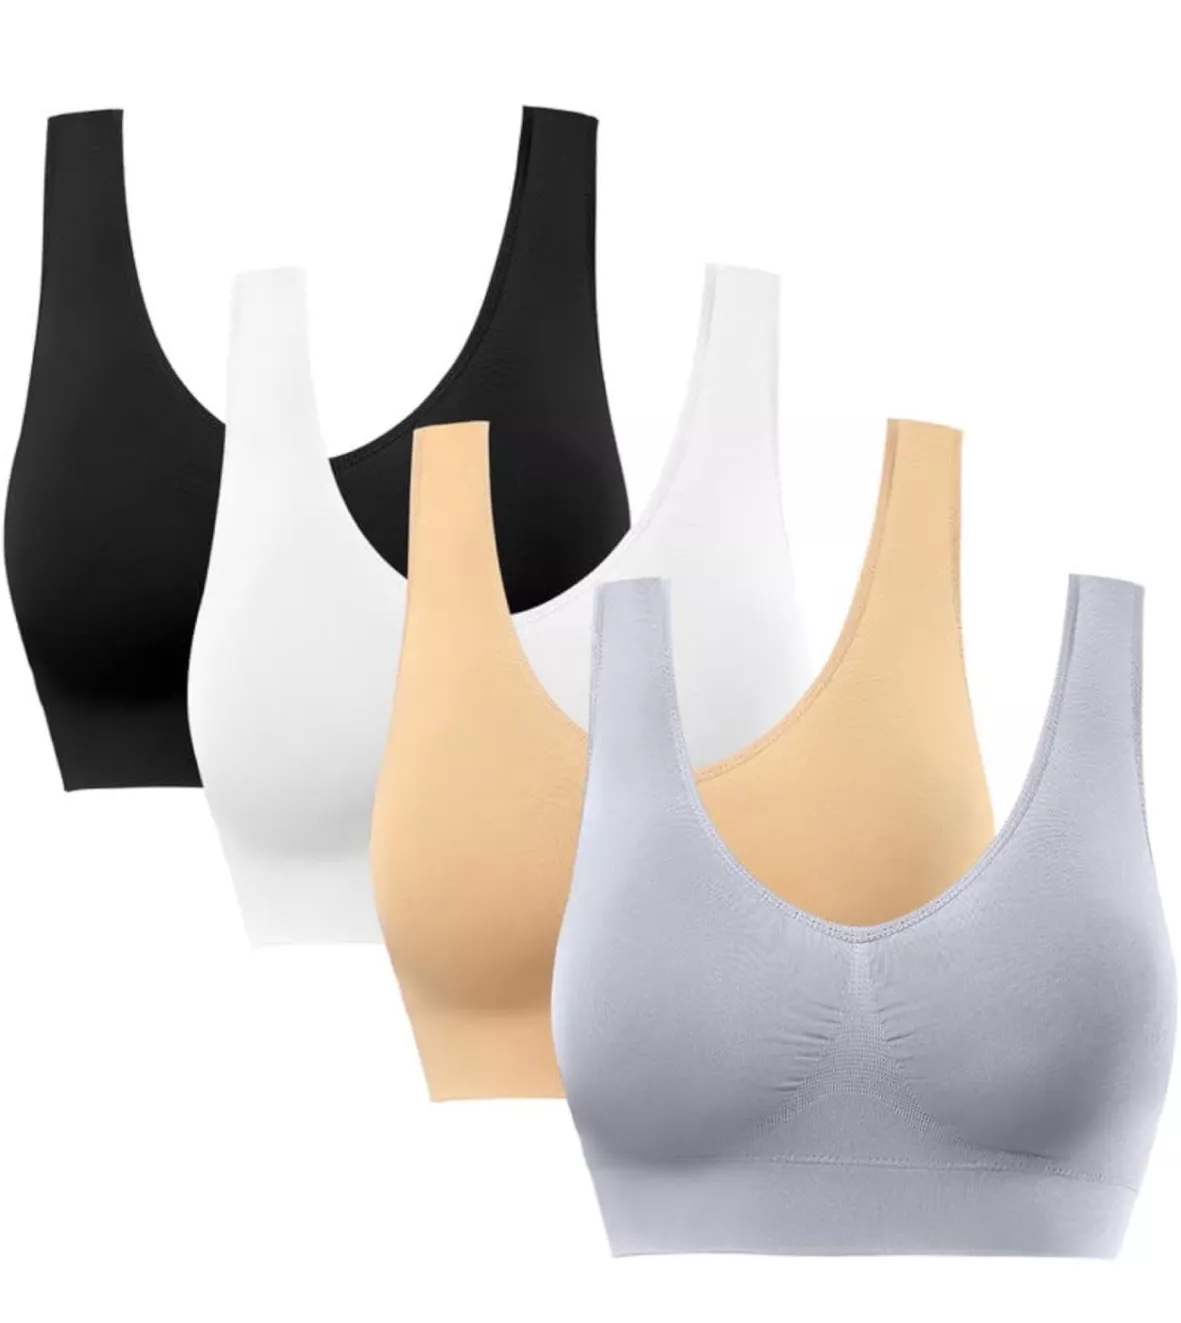  Quality Bra For Women Daily Use Bras Pack Of 3 / Stylus Women Bra